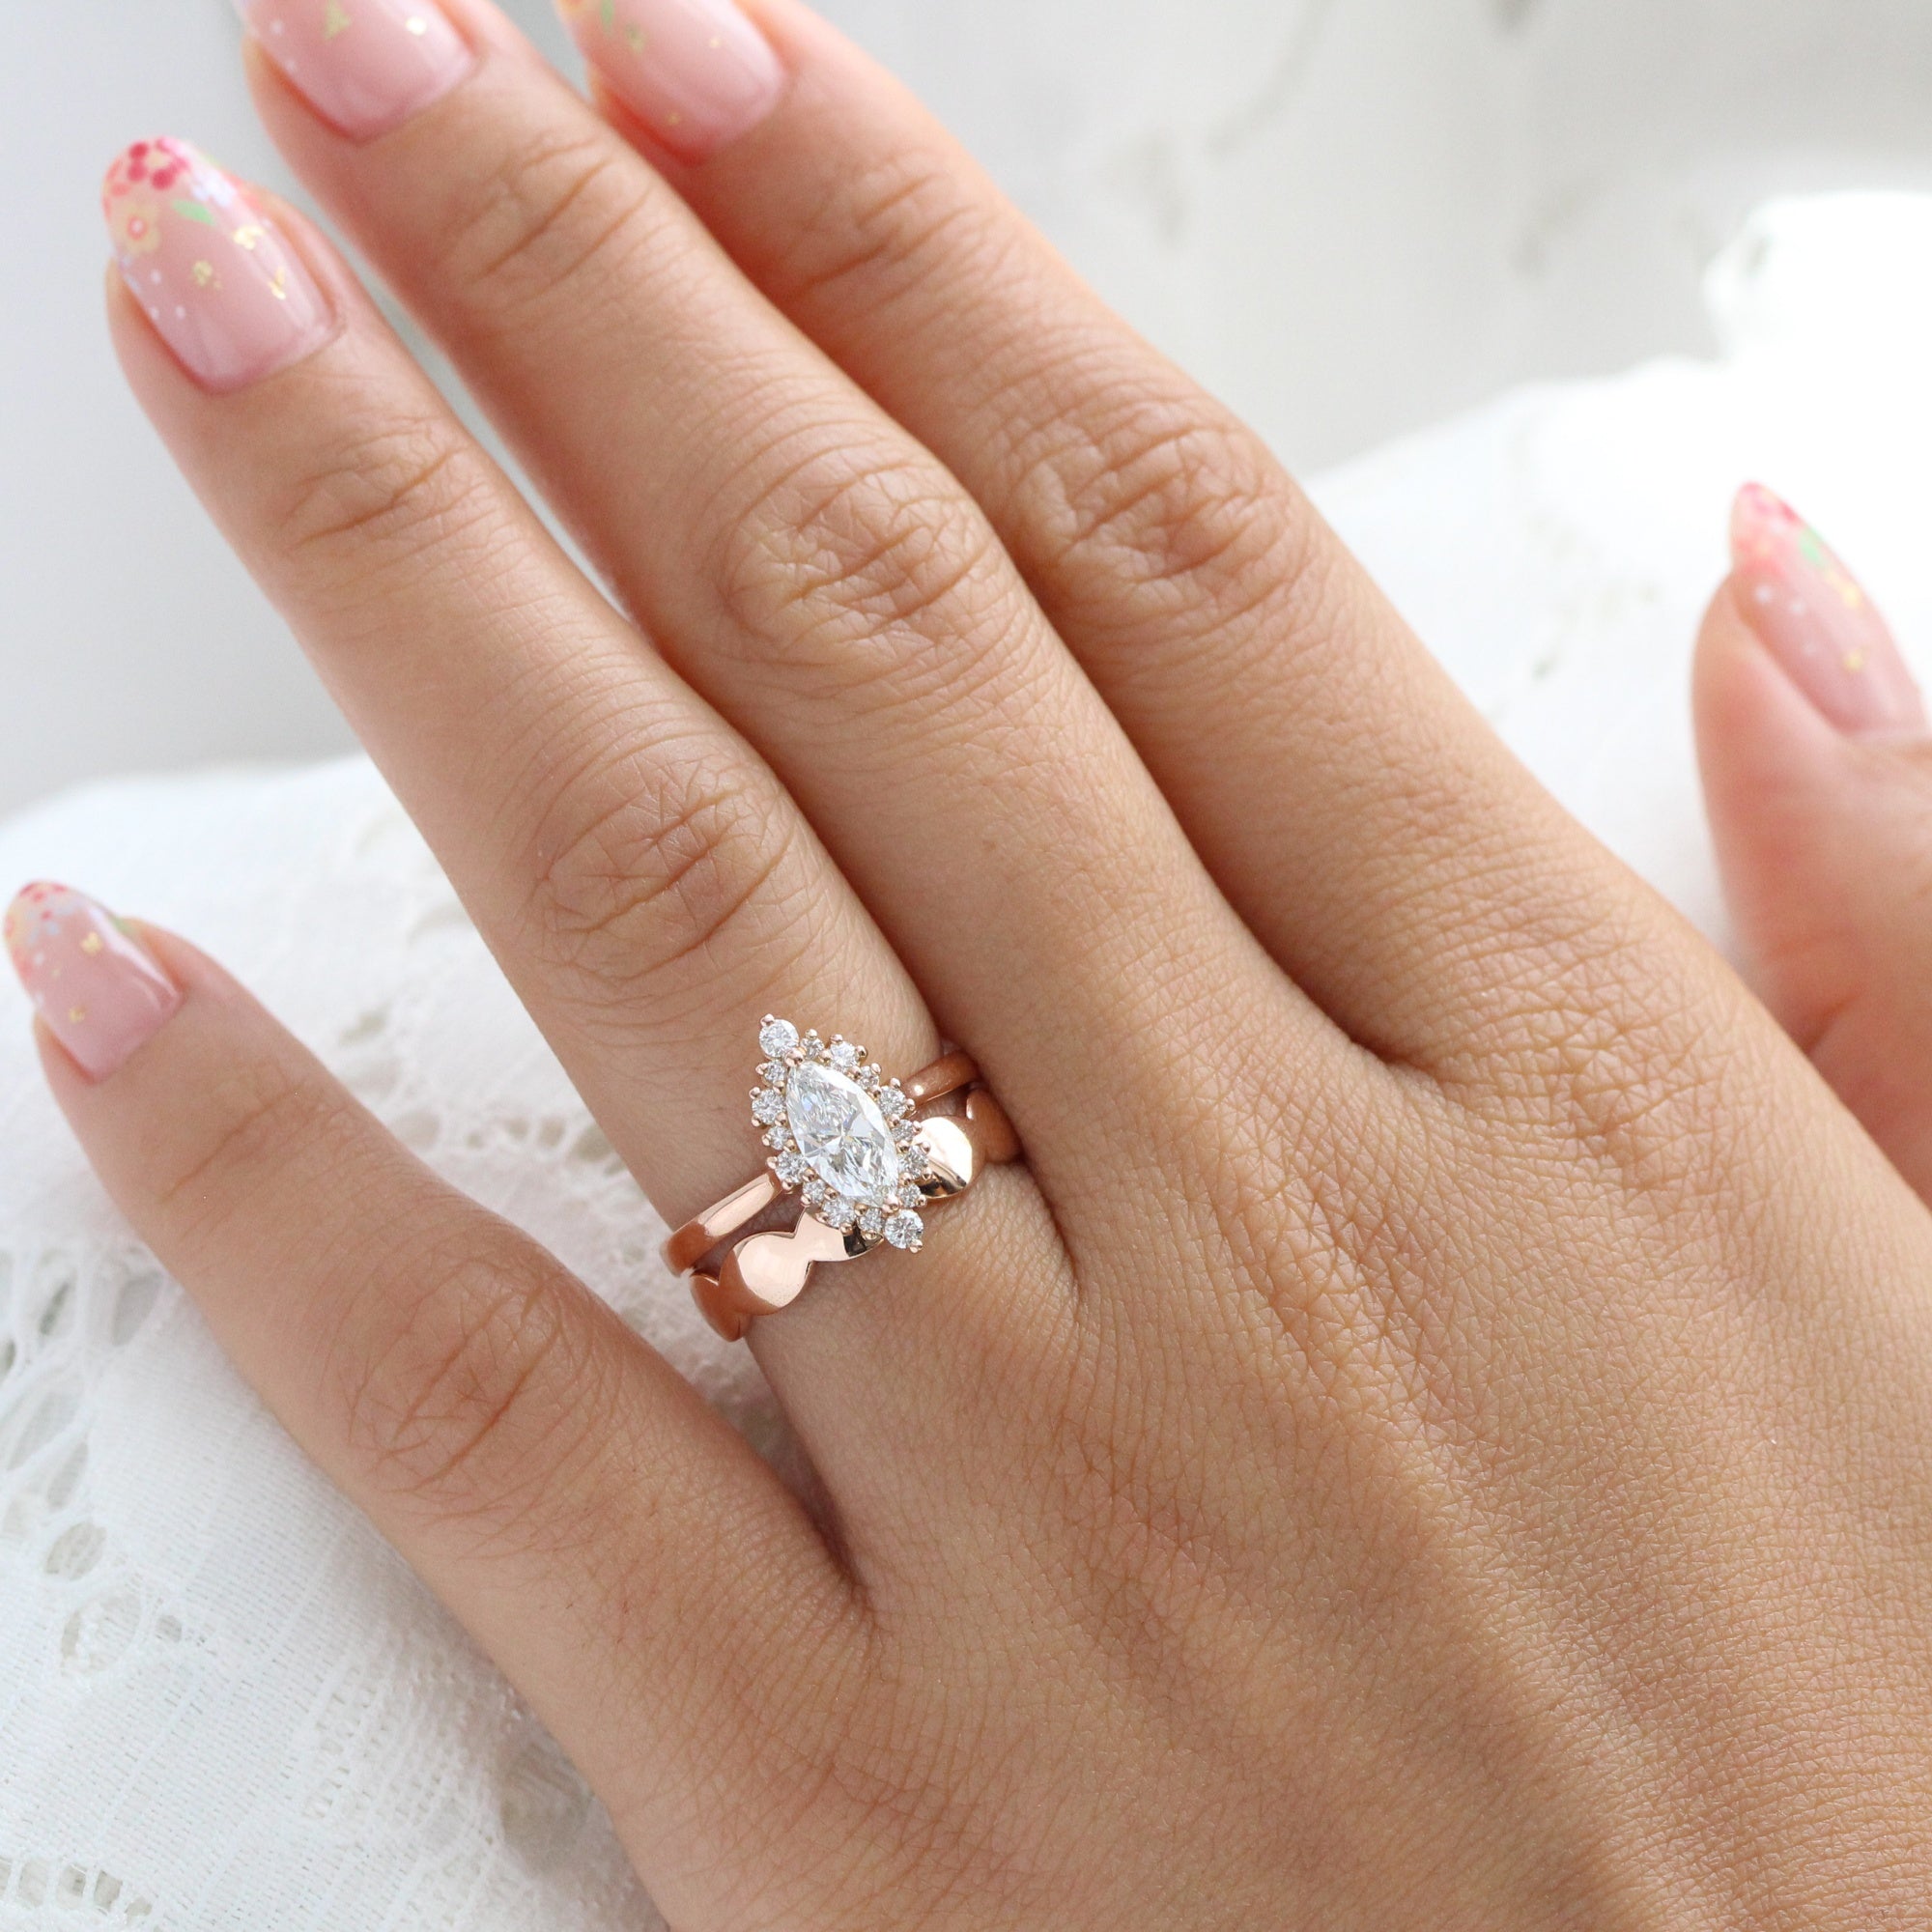 lab diamond ring stack rose gold marquise diamond halo engagement ring set La More Design Jewelry